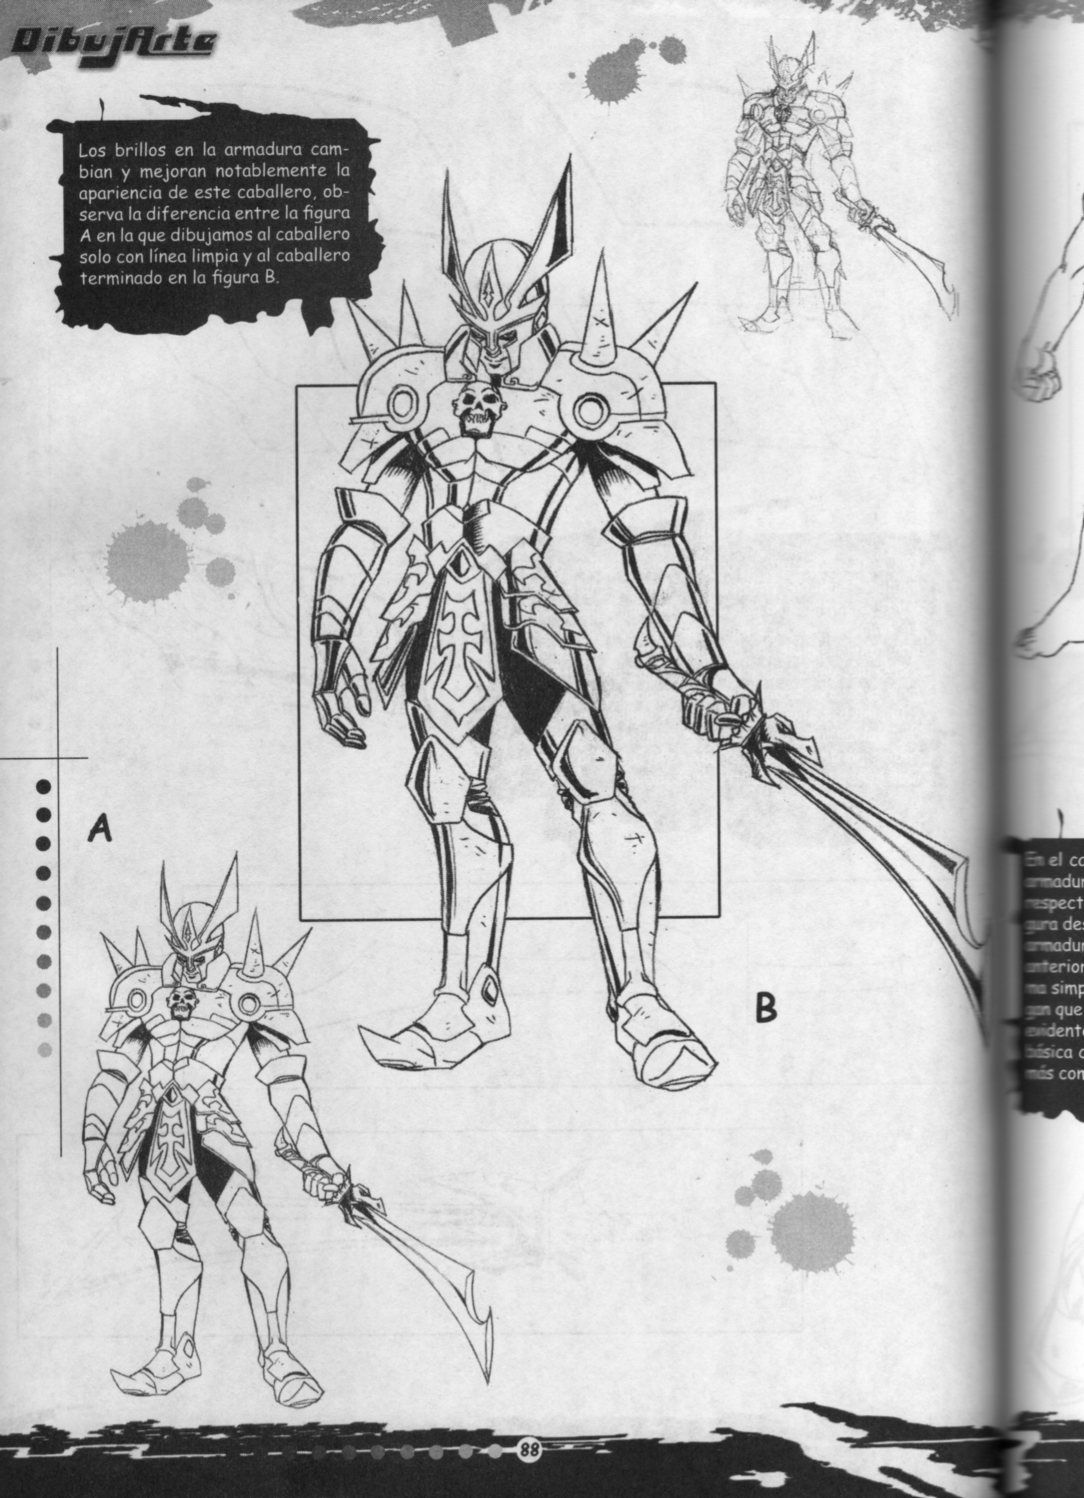 DibujArte Epecial Manga #18/20 - Armas armaduras y Personajes fantasticos [Spanish] 87